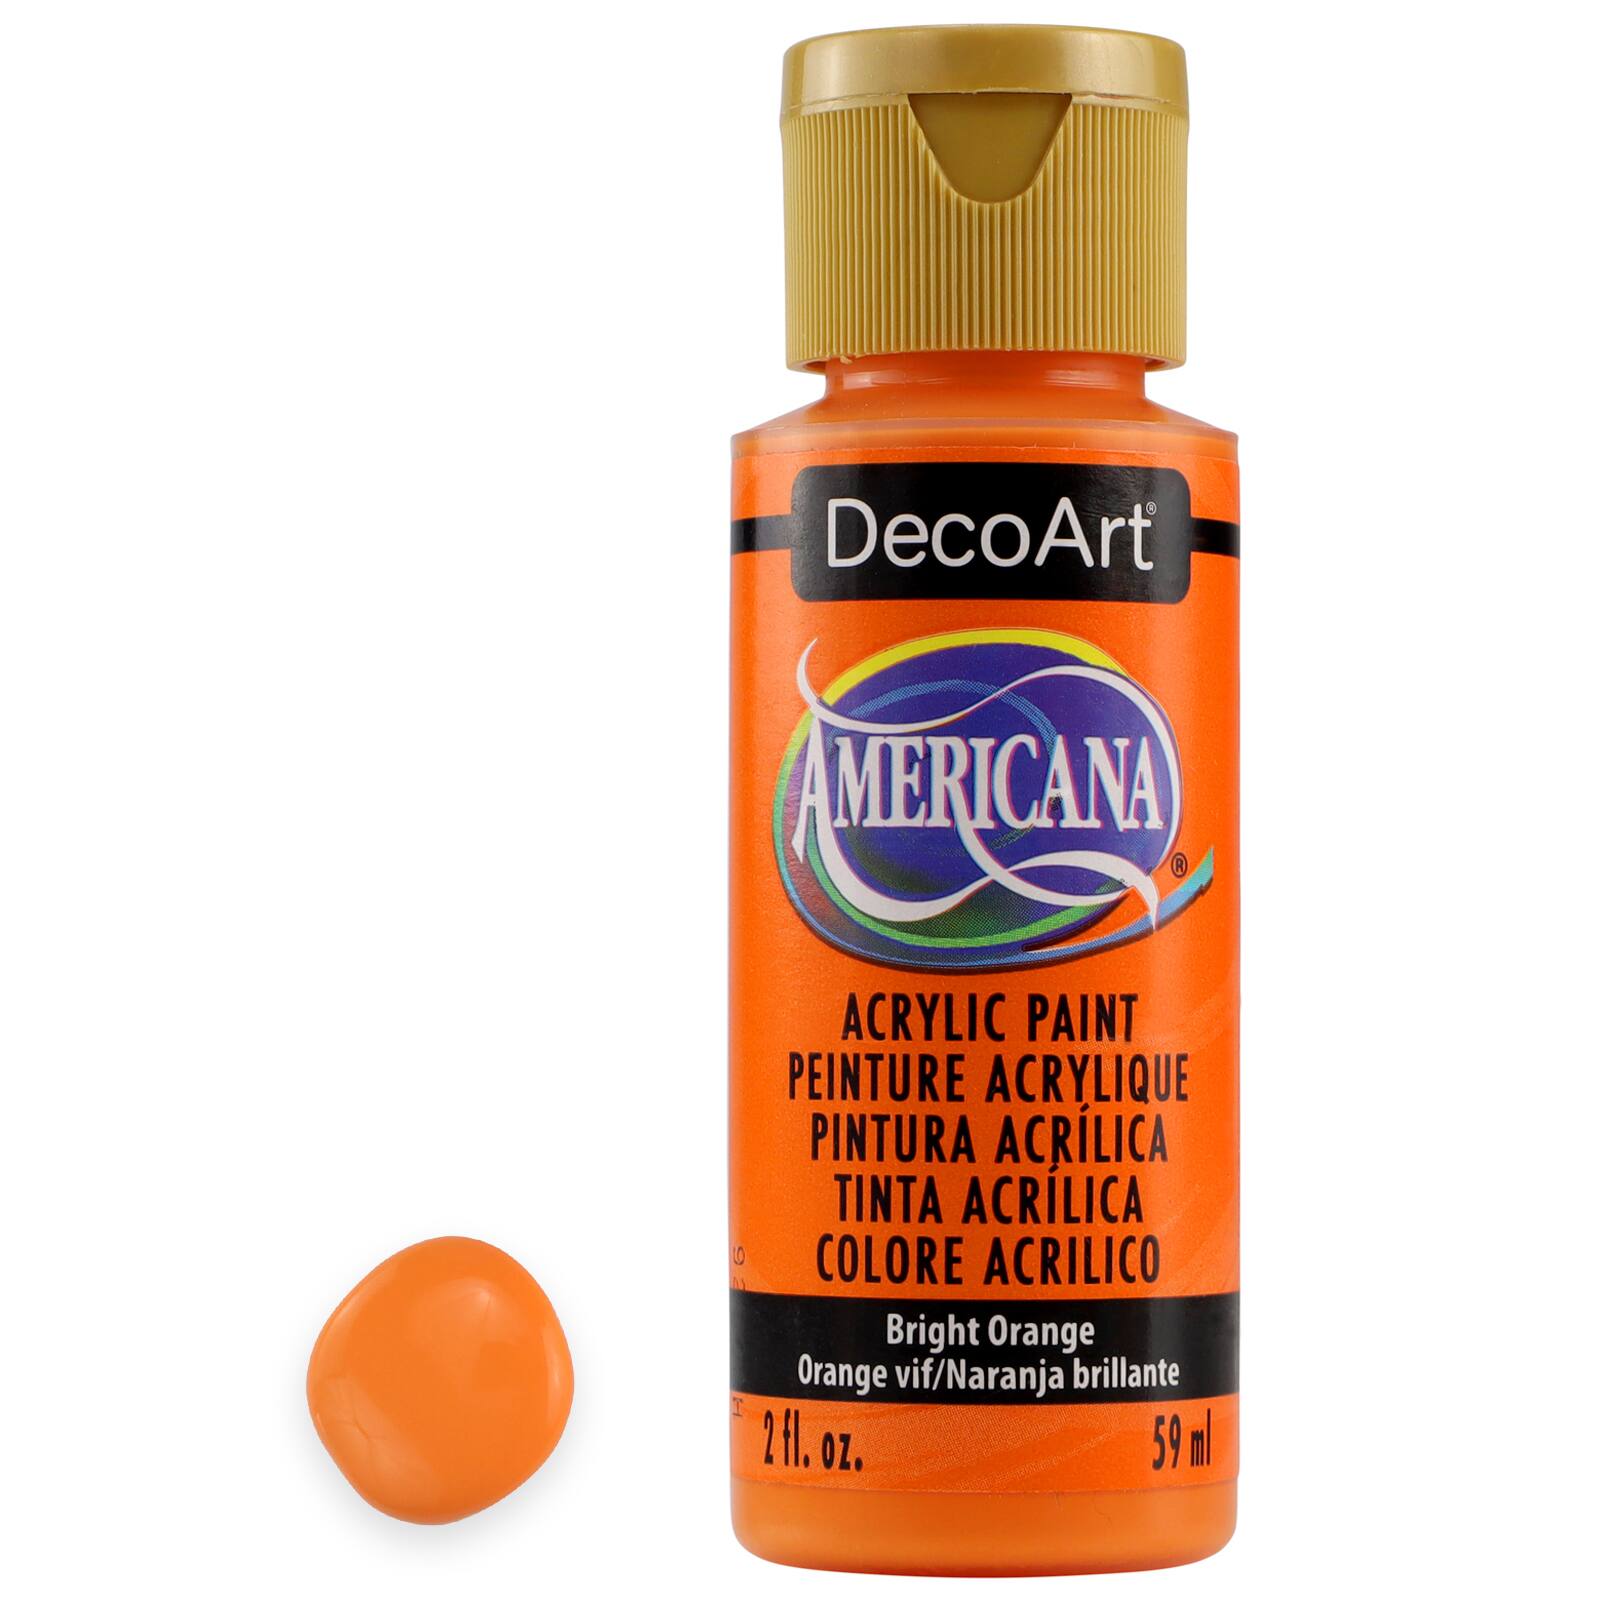 DecoArt Americana Acrylic Paint, 2 oz, Burnt Orange